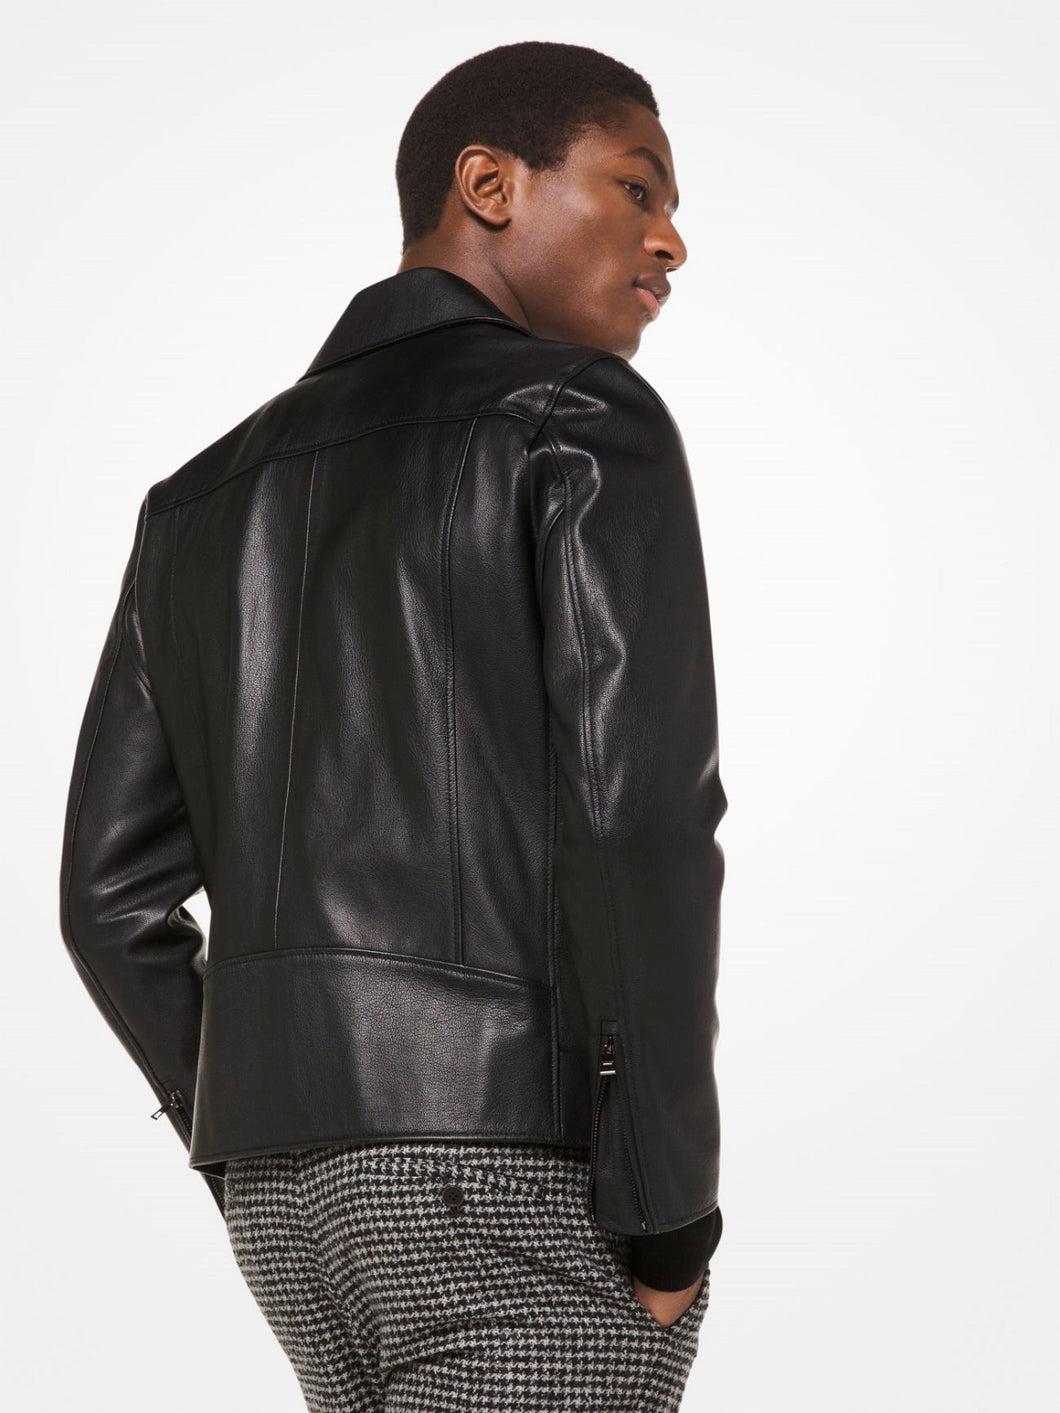 Black Leather Jacket - Shearling leather